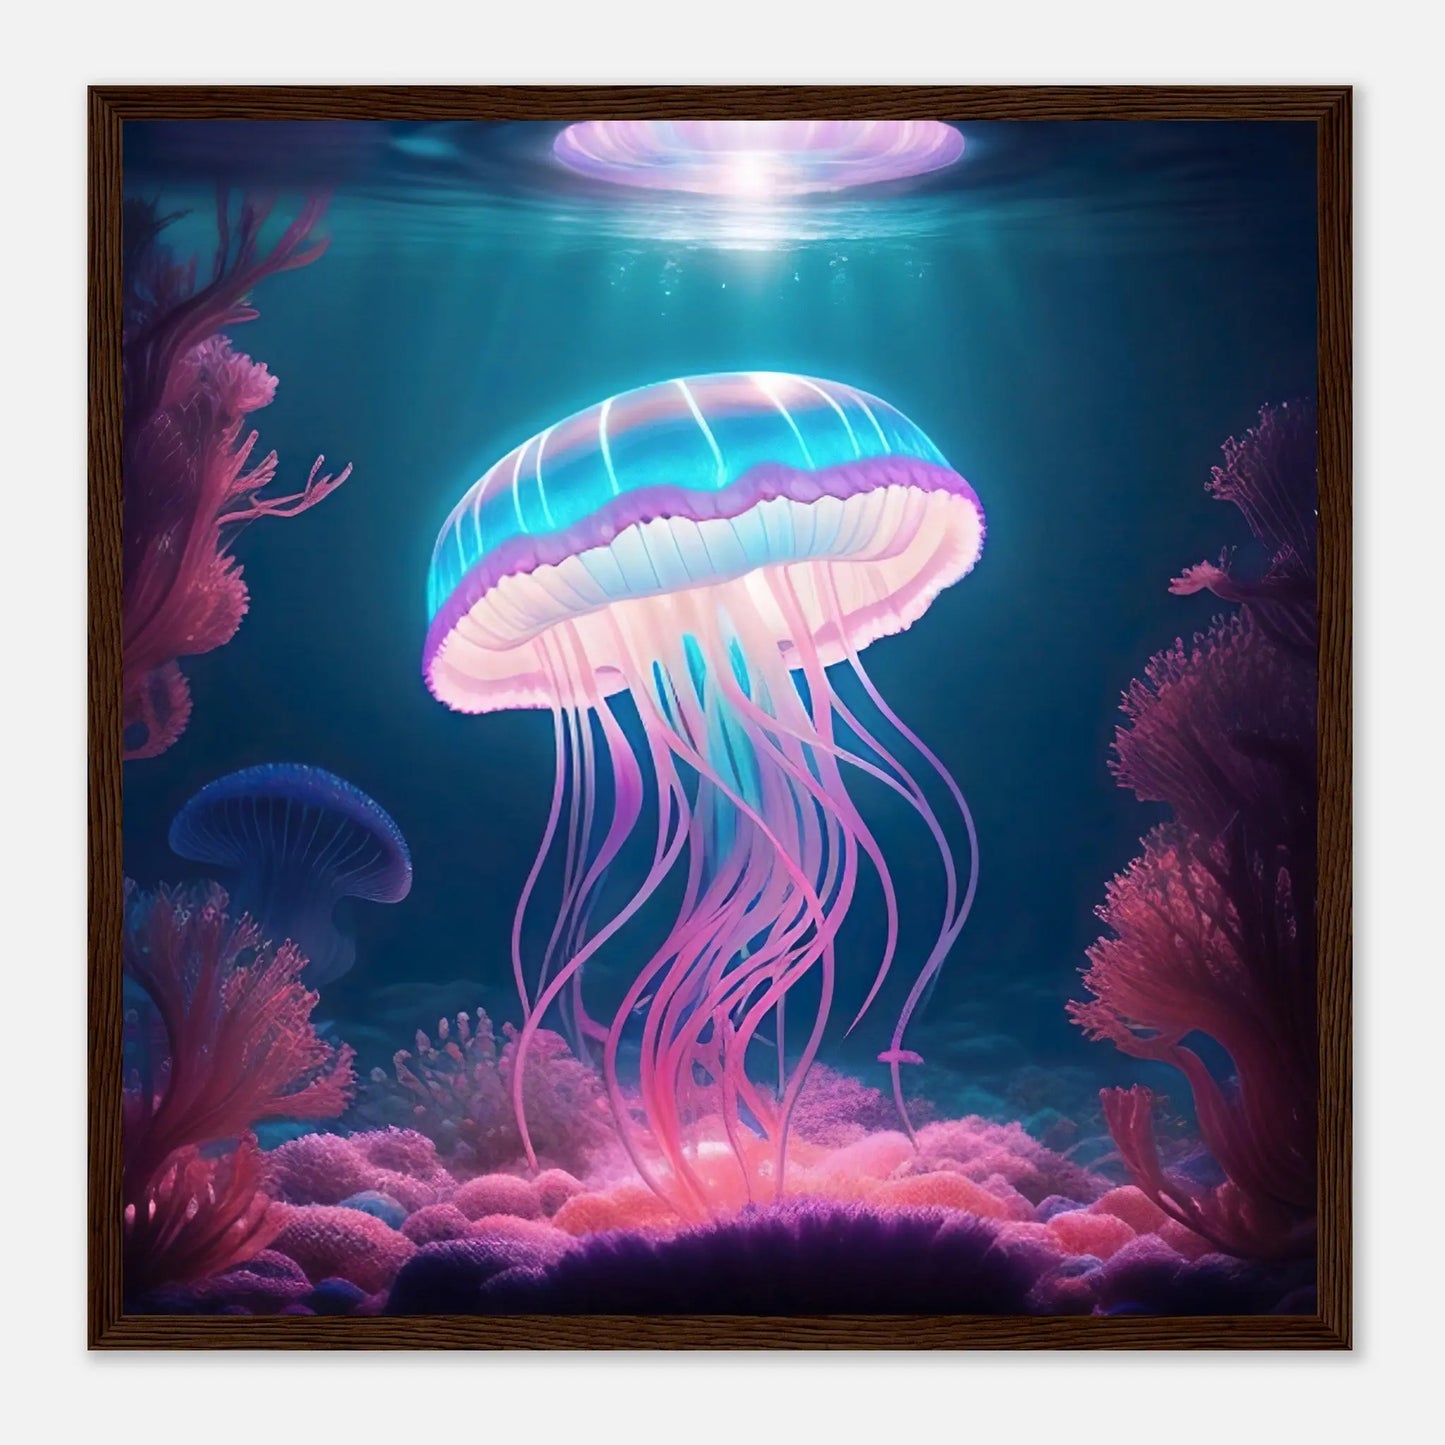 Gerahmtes Premium-Poster - Qualle - Digitaler Stil, KI-Kunst - RolConArt, Unterwasserlandschaften, 50x50-cm-20x20-Dunkler-Holzrahmen